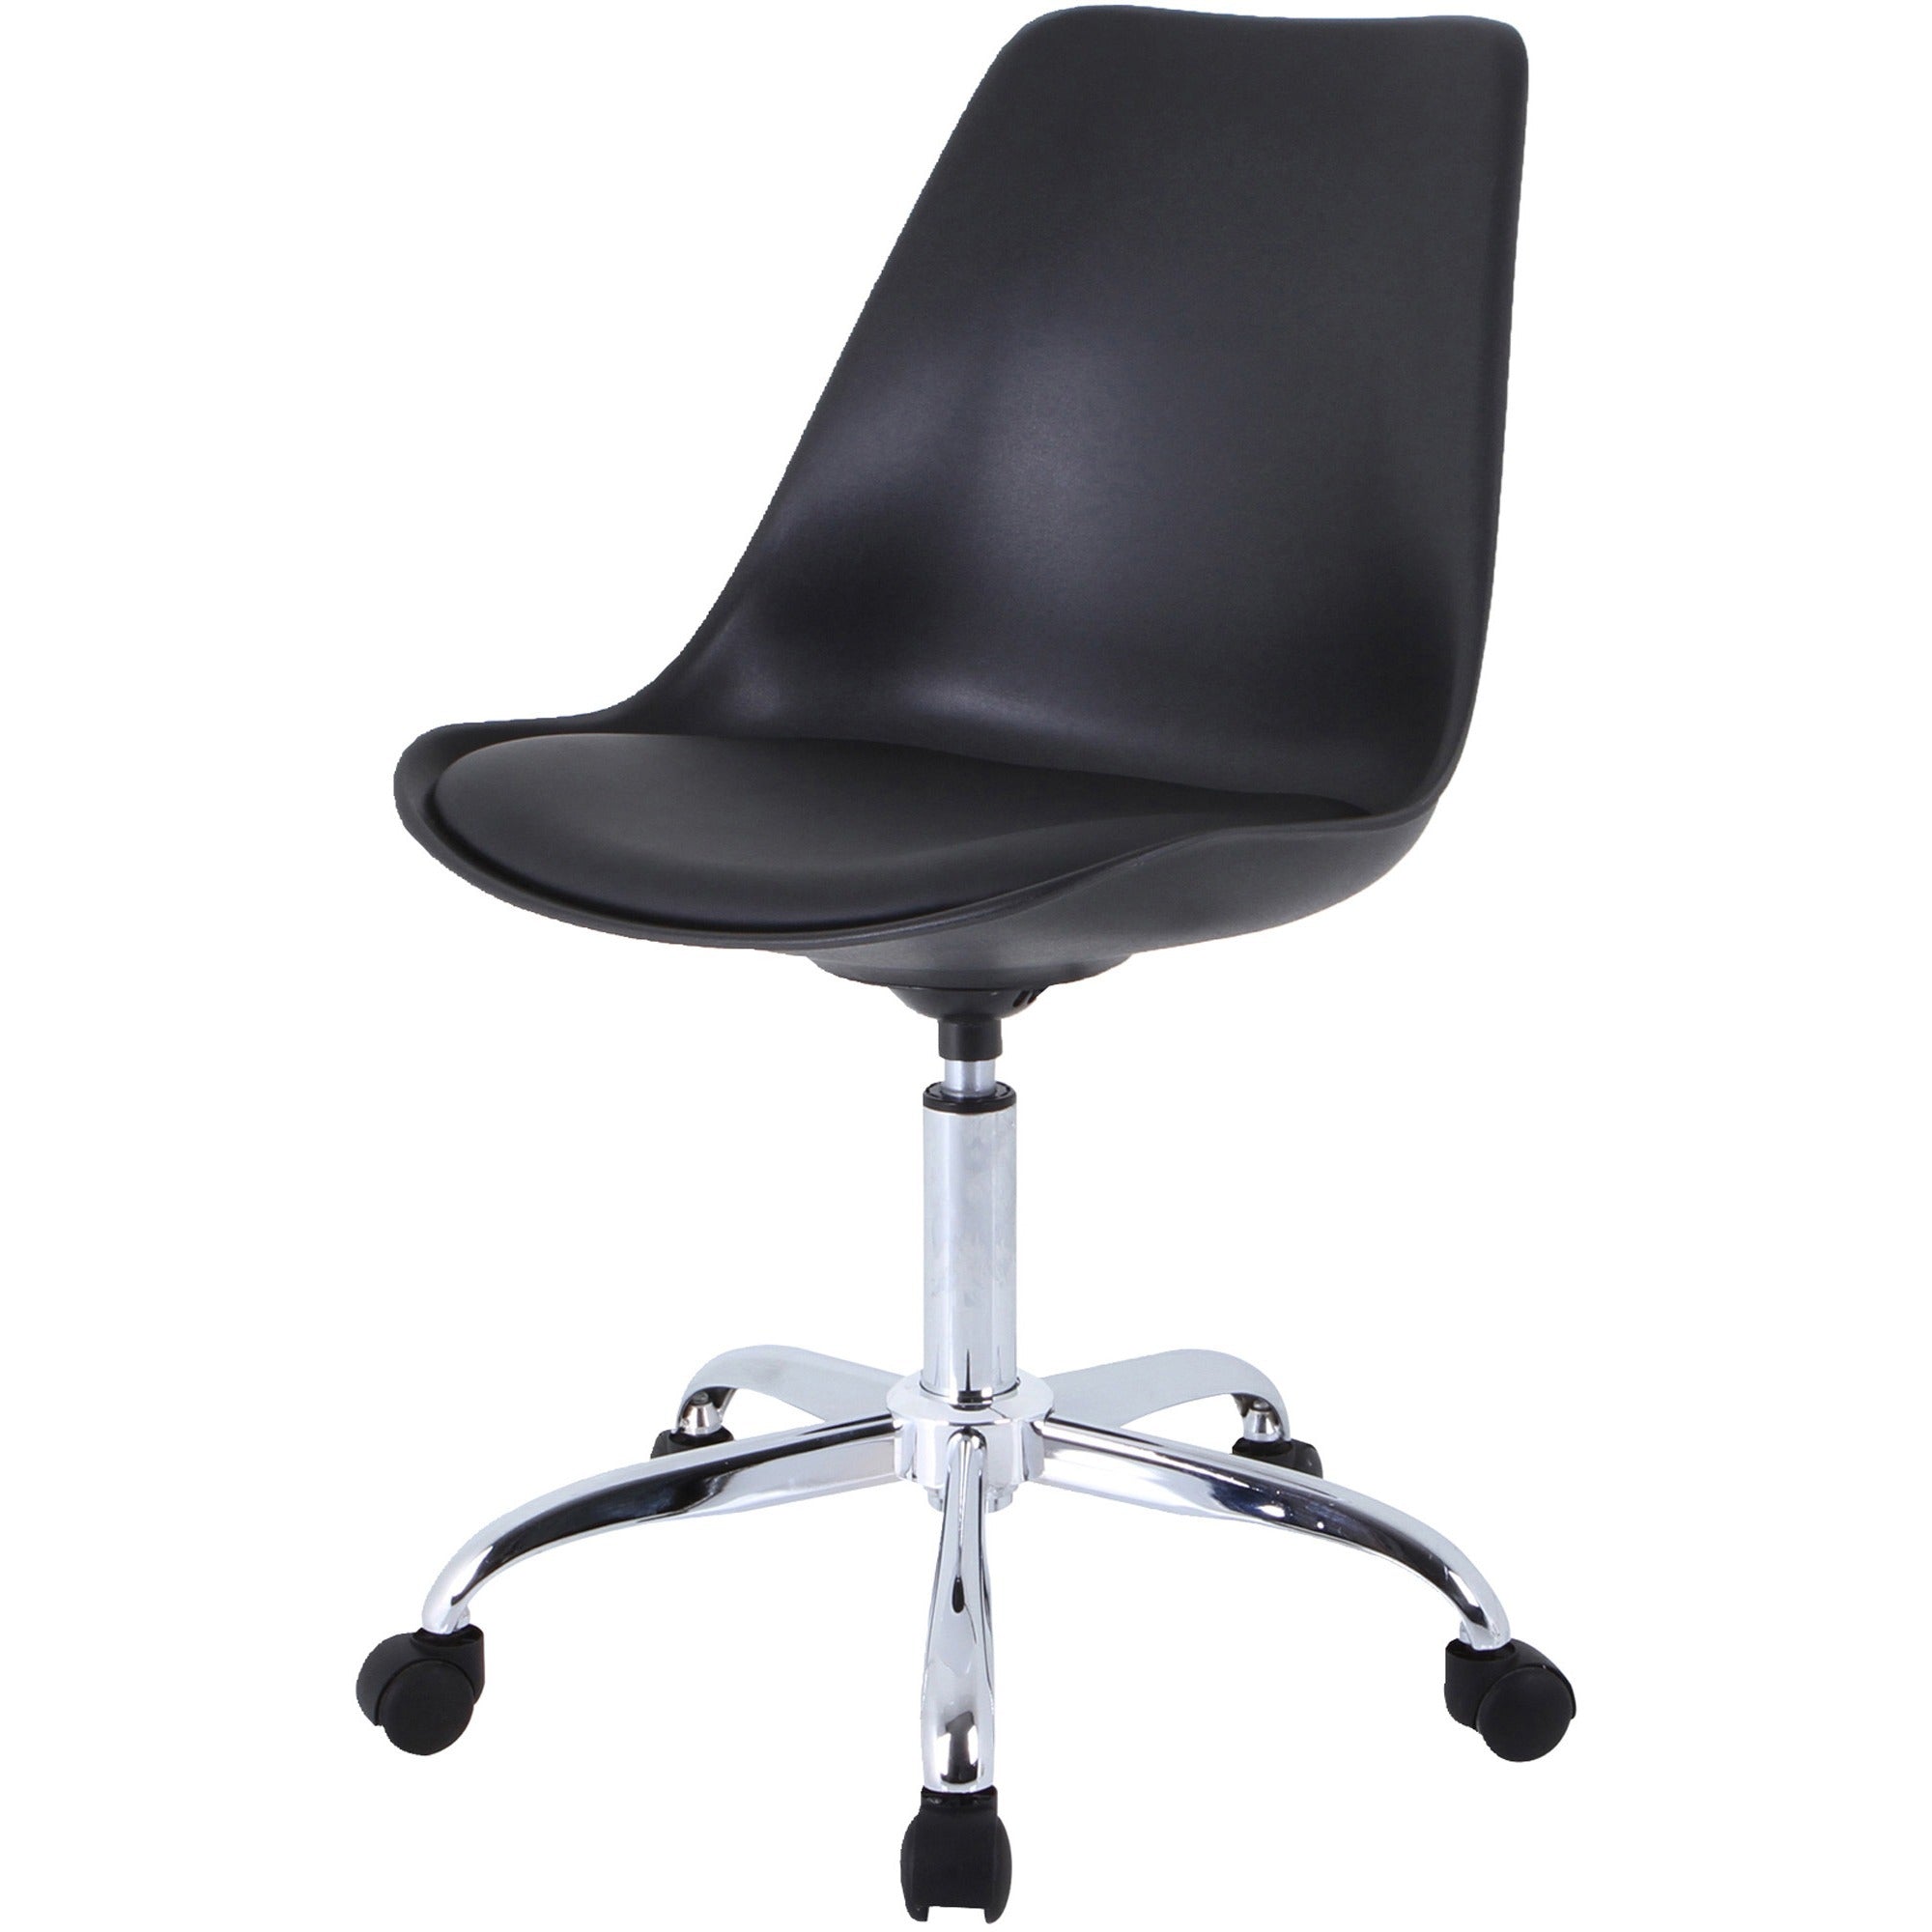 nusparc-padded-seat-poly-task-chair-poly-seat-high-back-5-star-base-black-polyvinyl-chloride-pvc-plastic-polyurethane-1-each_nprch303cnbk - 4